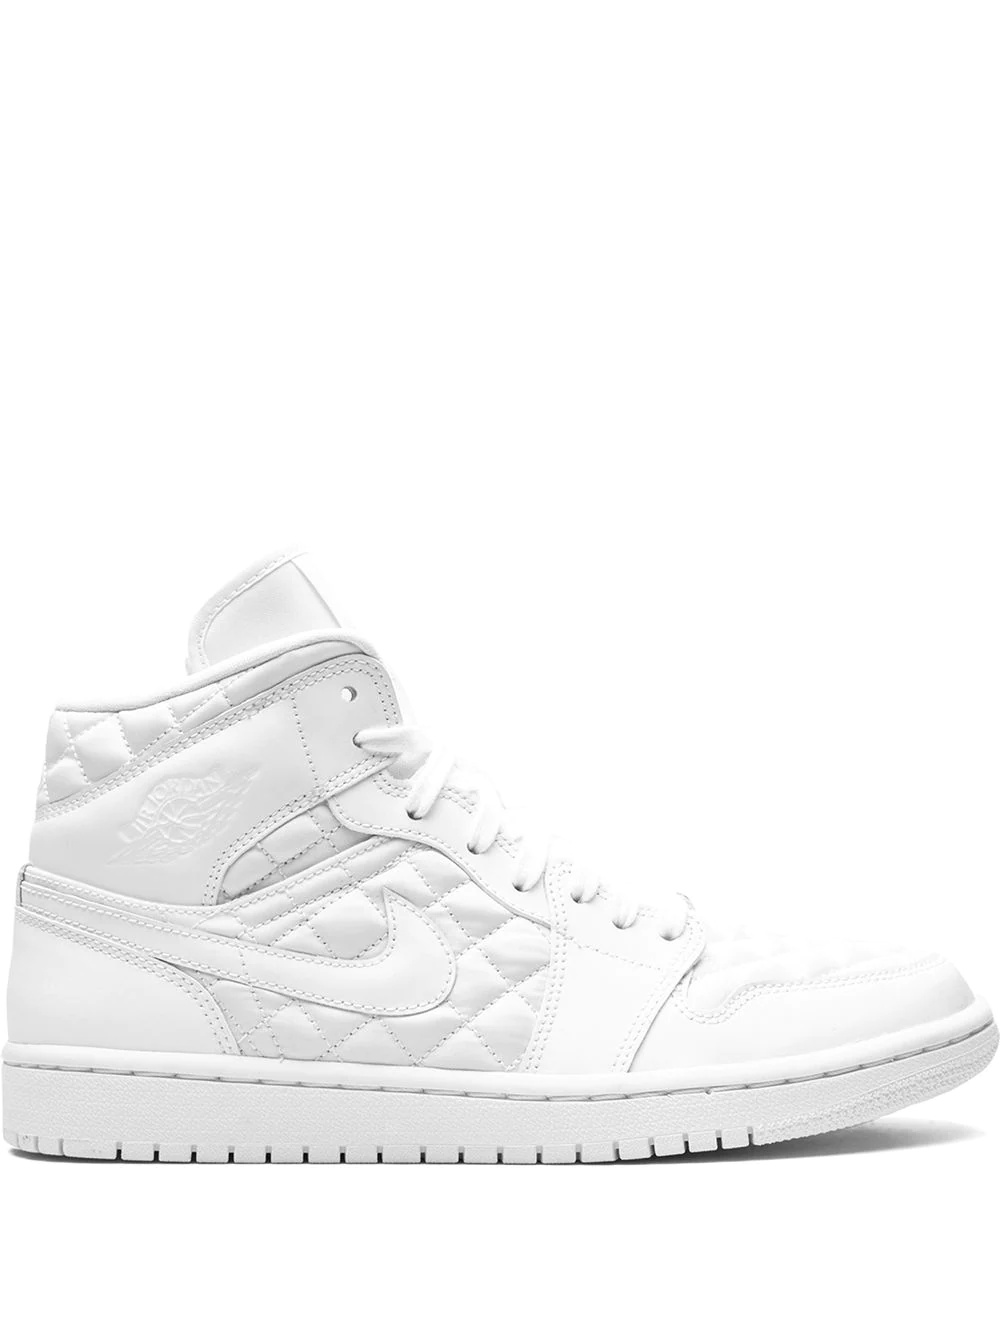 Air Jordan 1 Mid "Quilted White" sneakers - 1